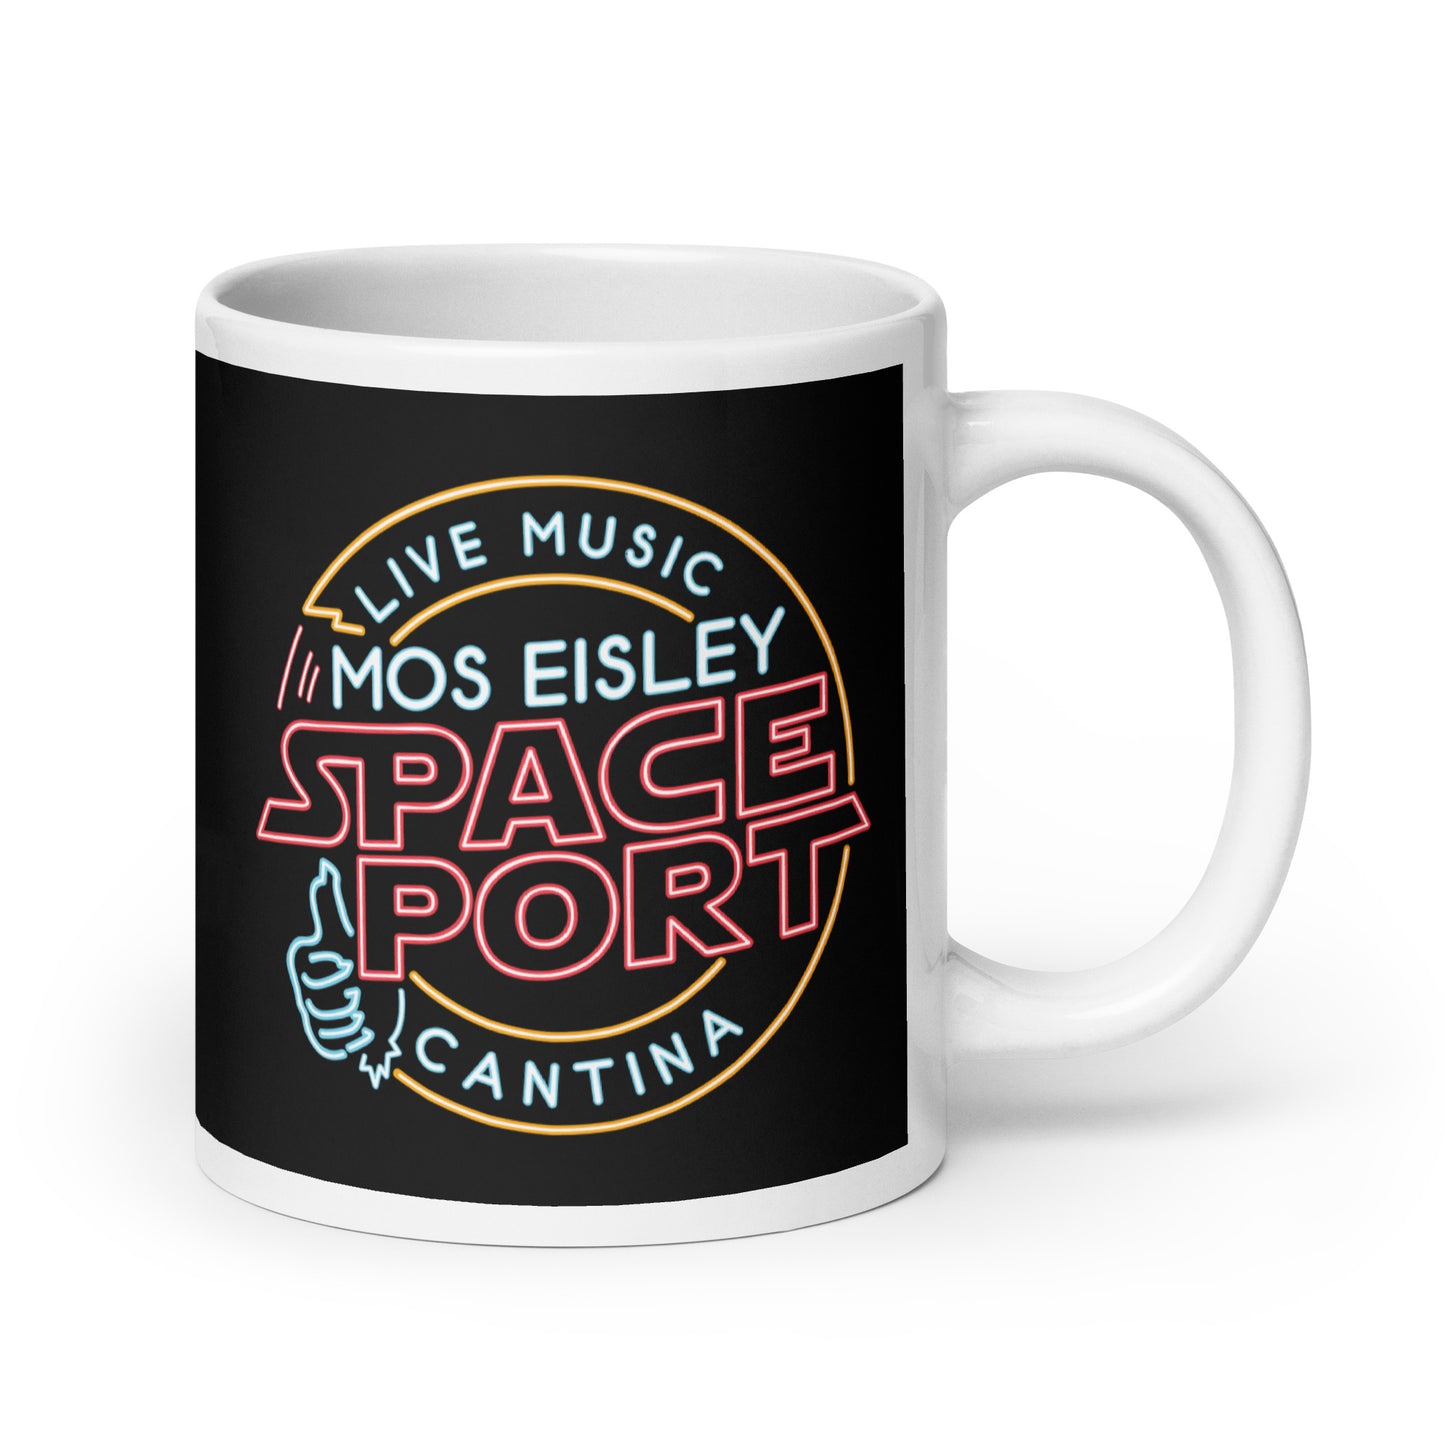 Mos Eisley Space Port Mug